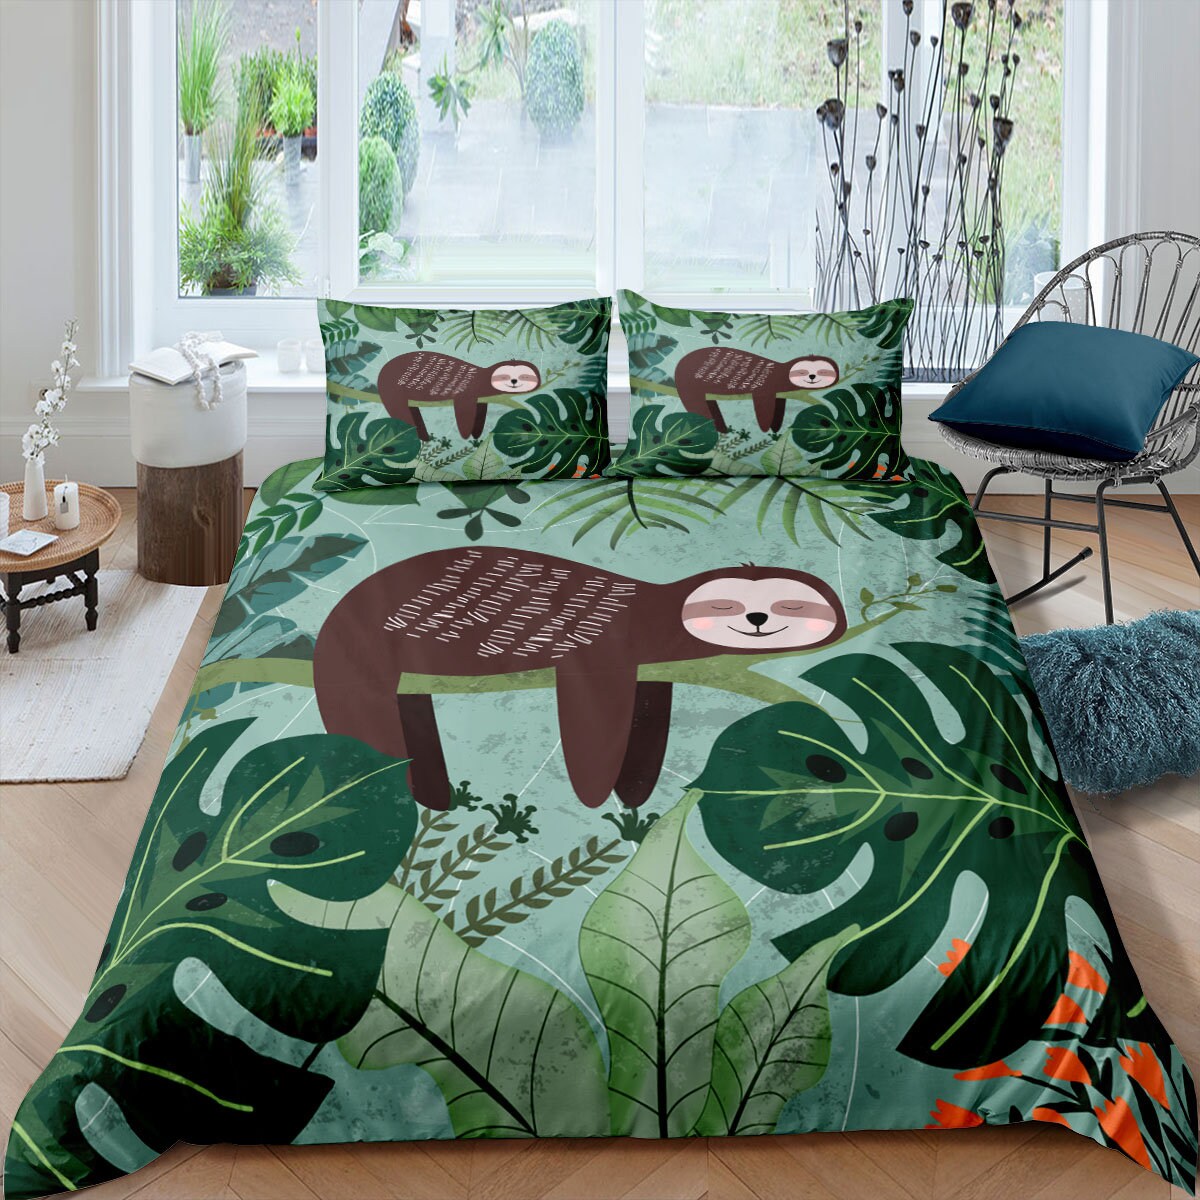 Friendly old sloth3D Print Duvet Quilt Doona Covers Pillow Case Bedding Sets 